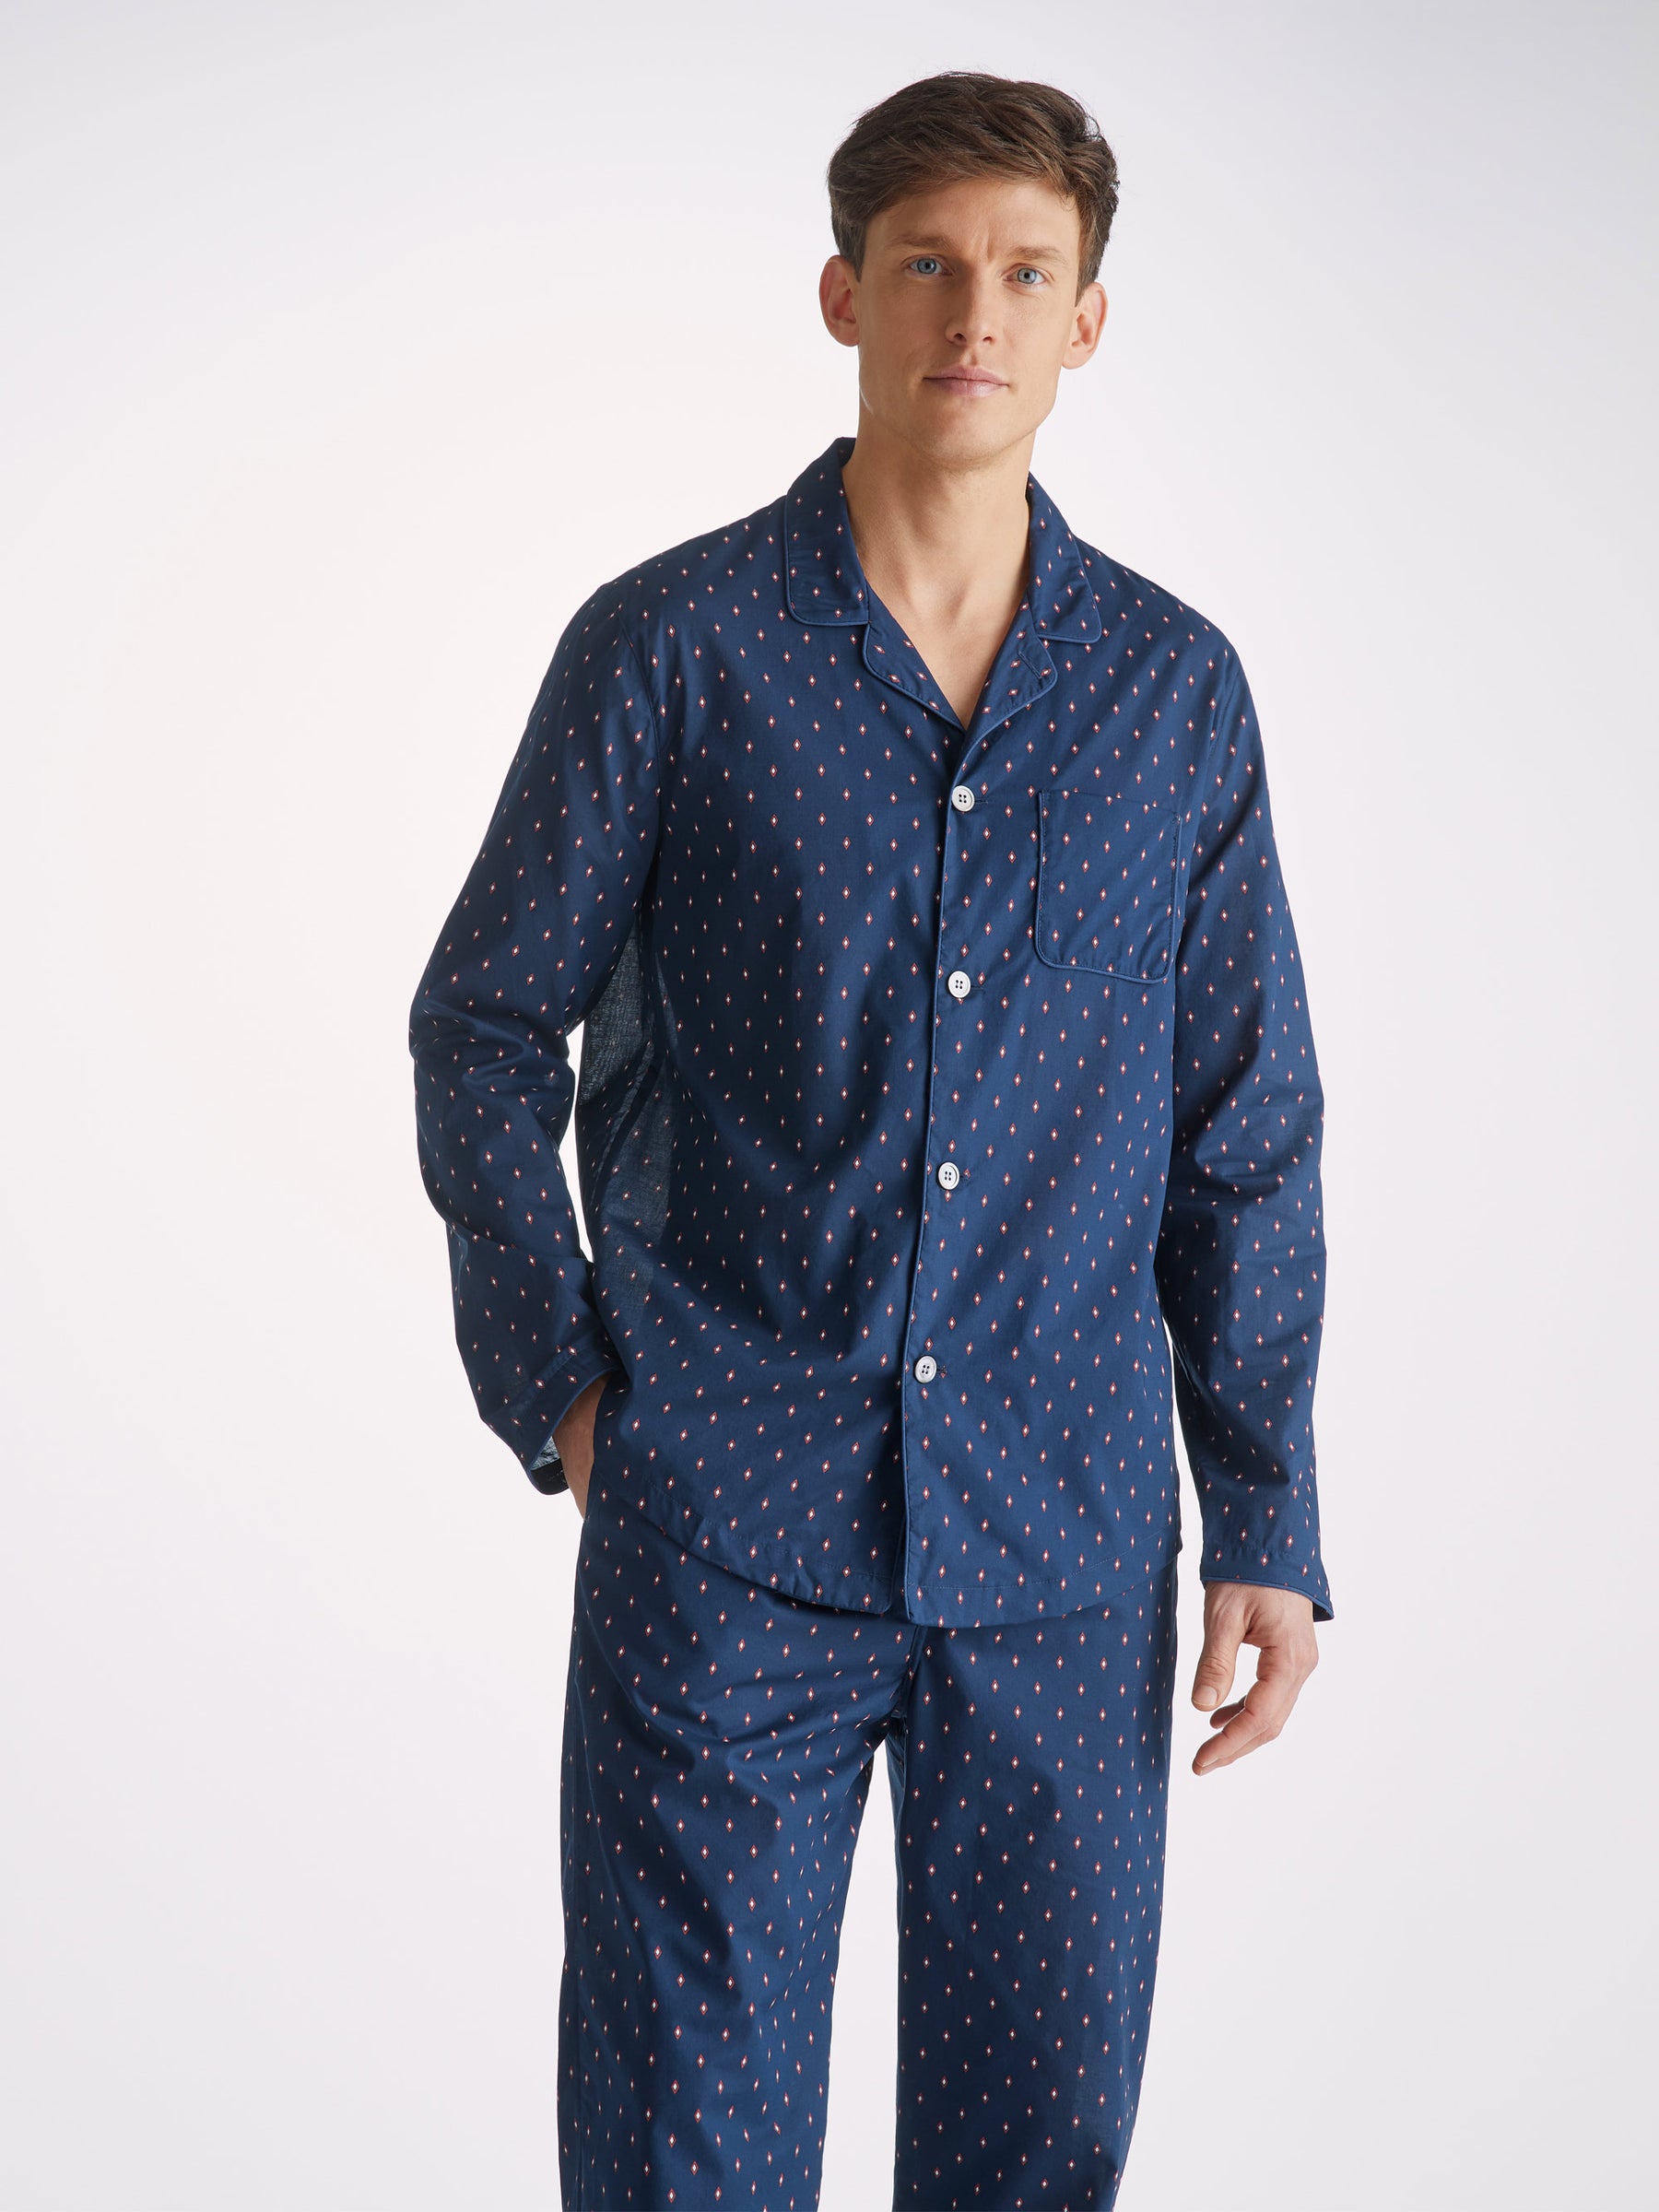 Men's Modern Fit Pyjamas Nelson 96 Cotton Batiste Navy